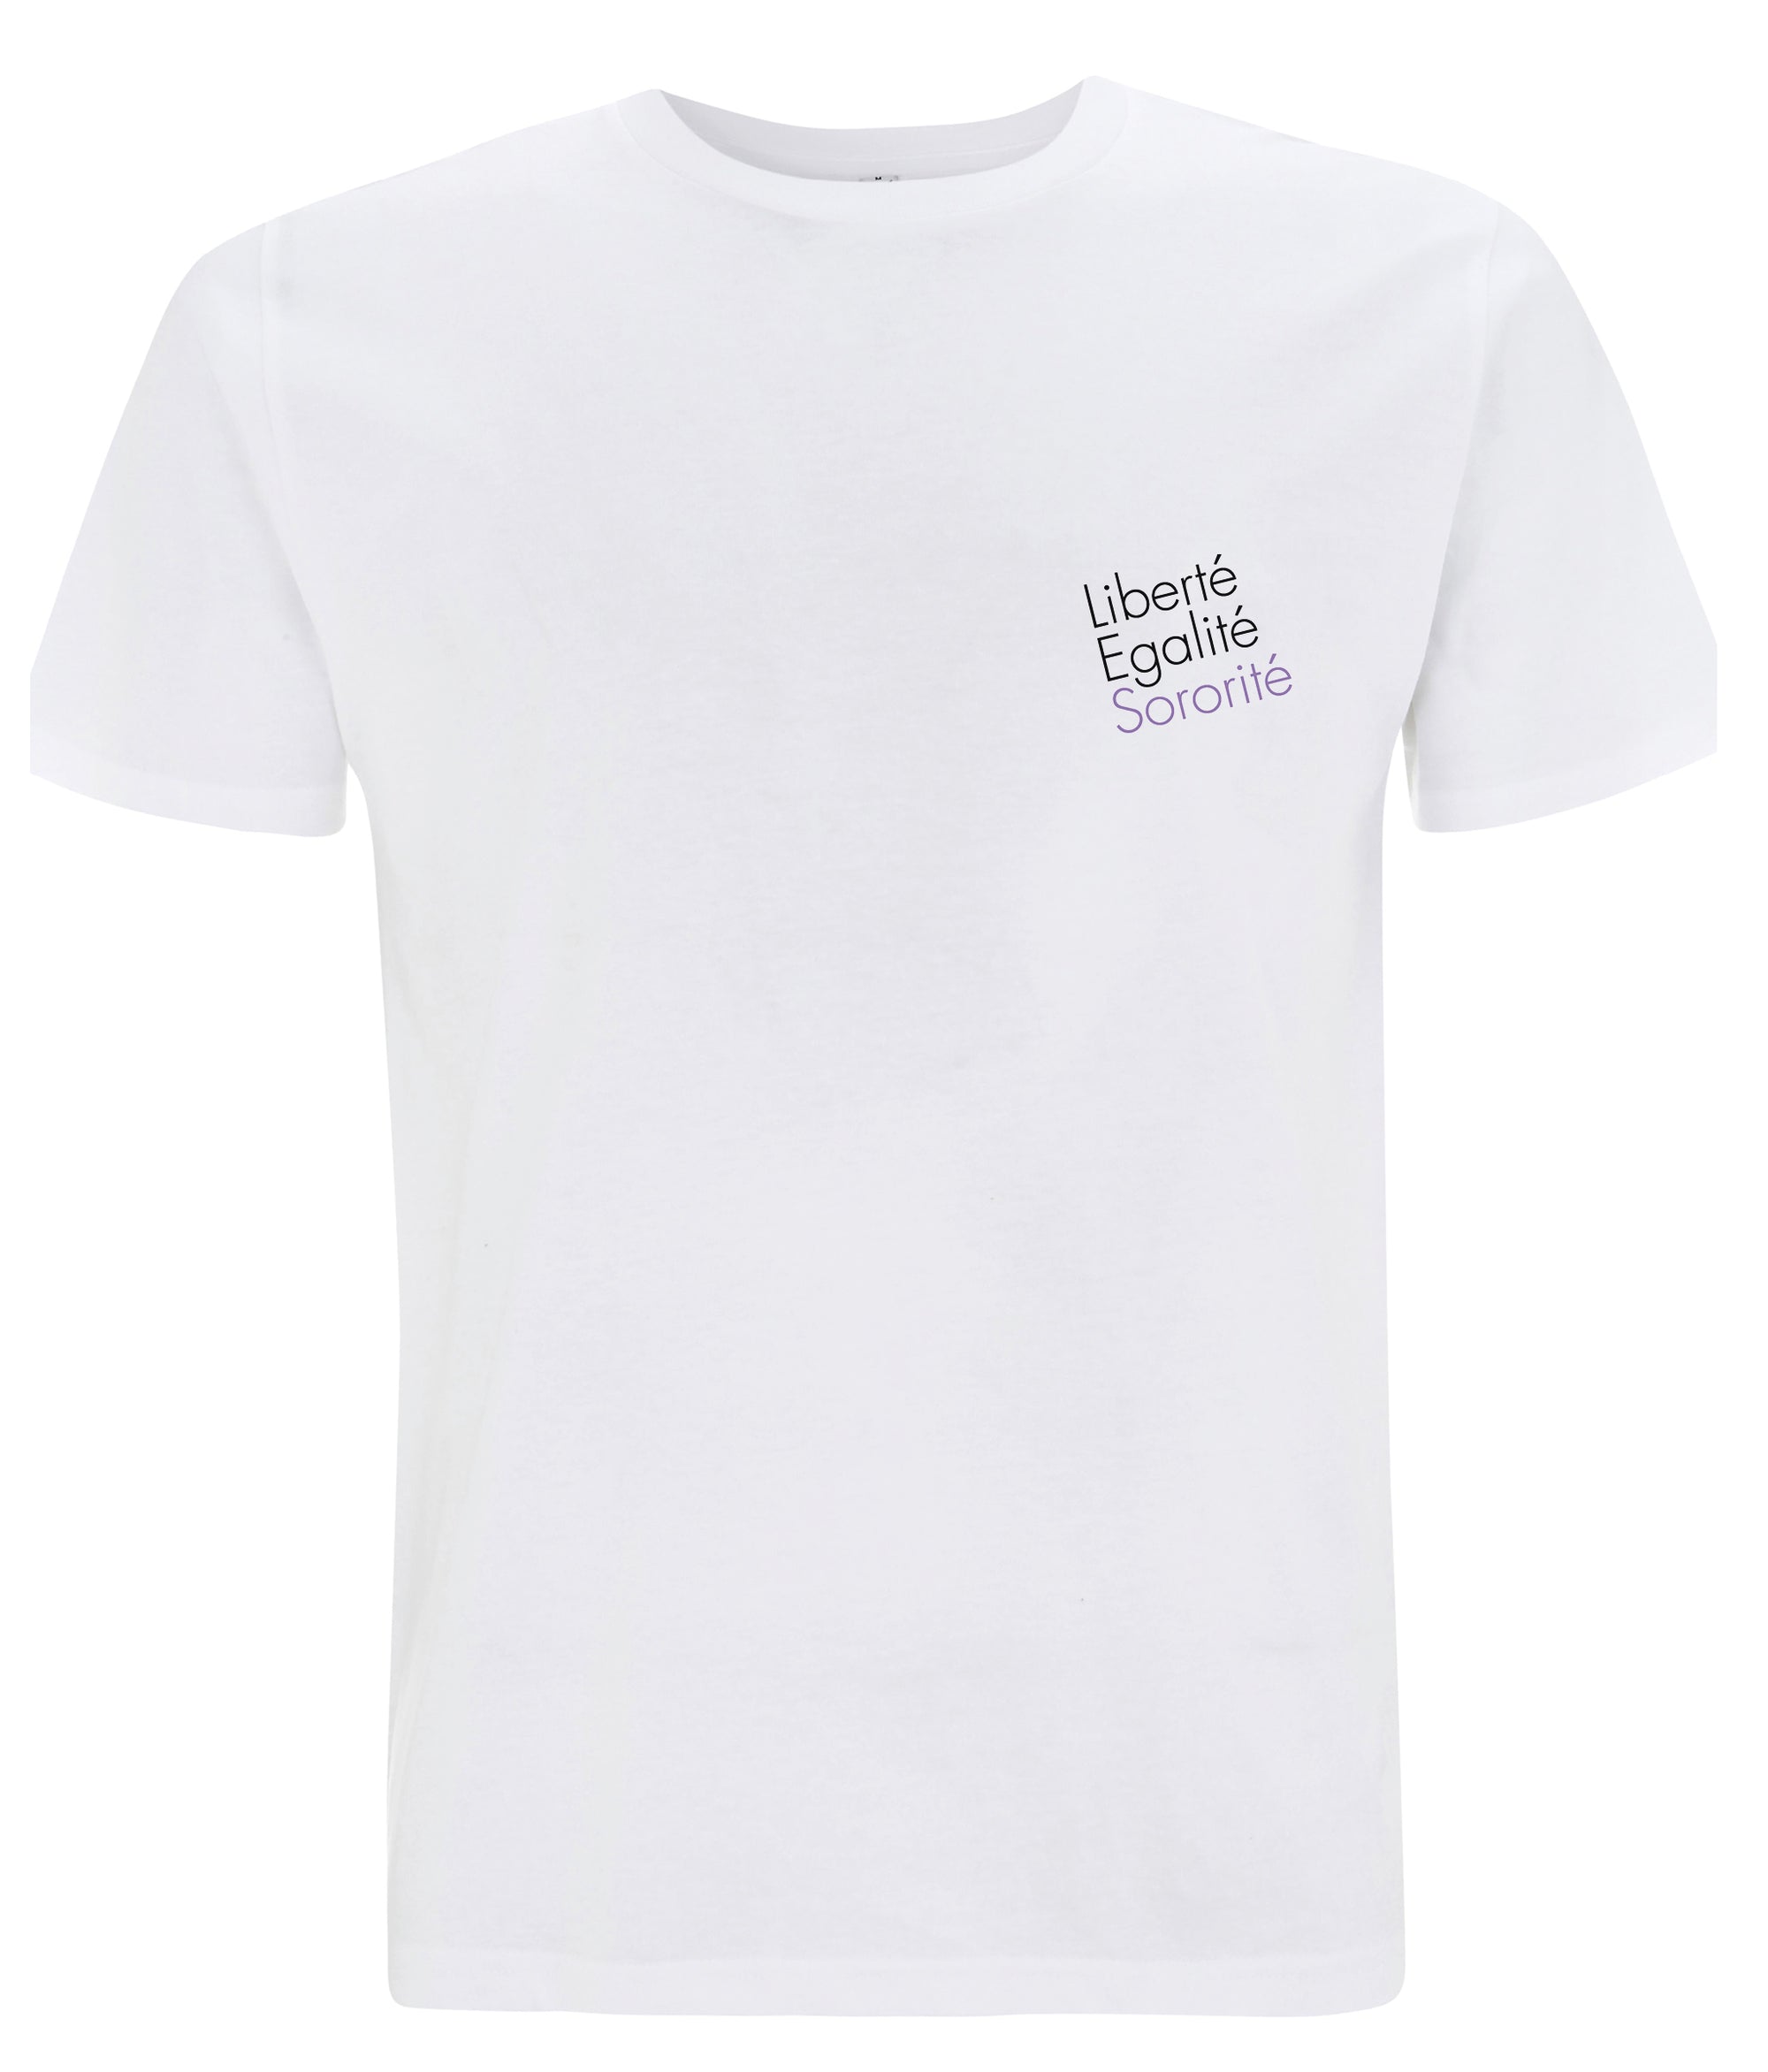 Liberté Egalité Sororité Organic Feminist T Shirt White